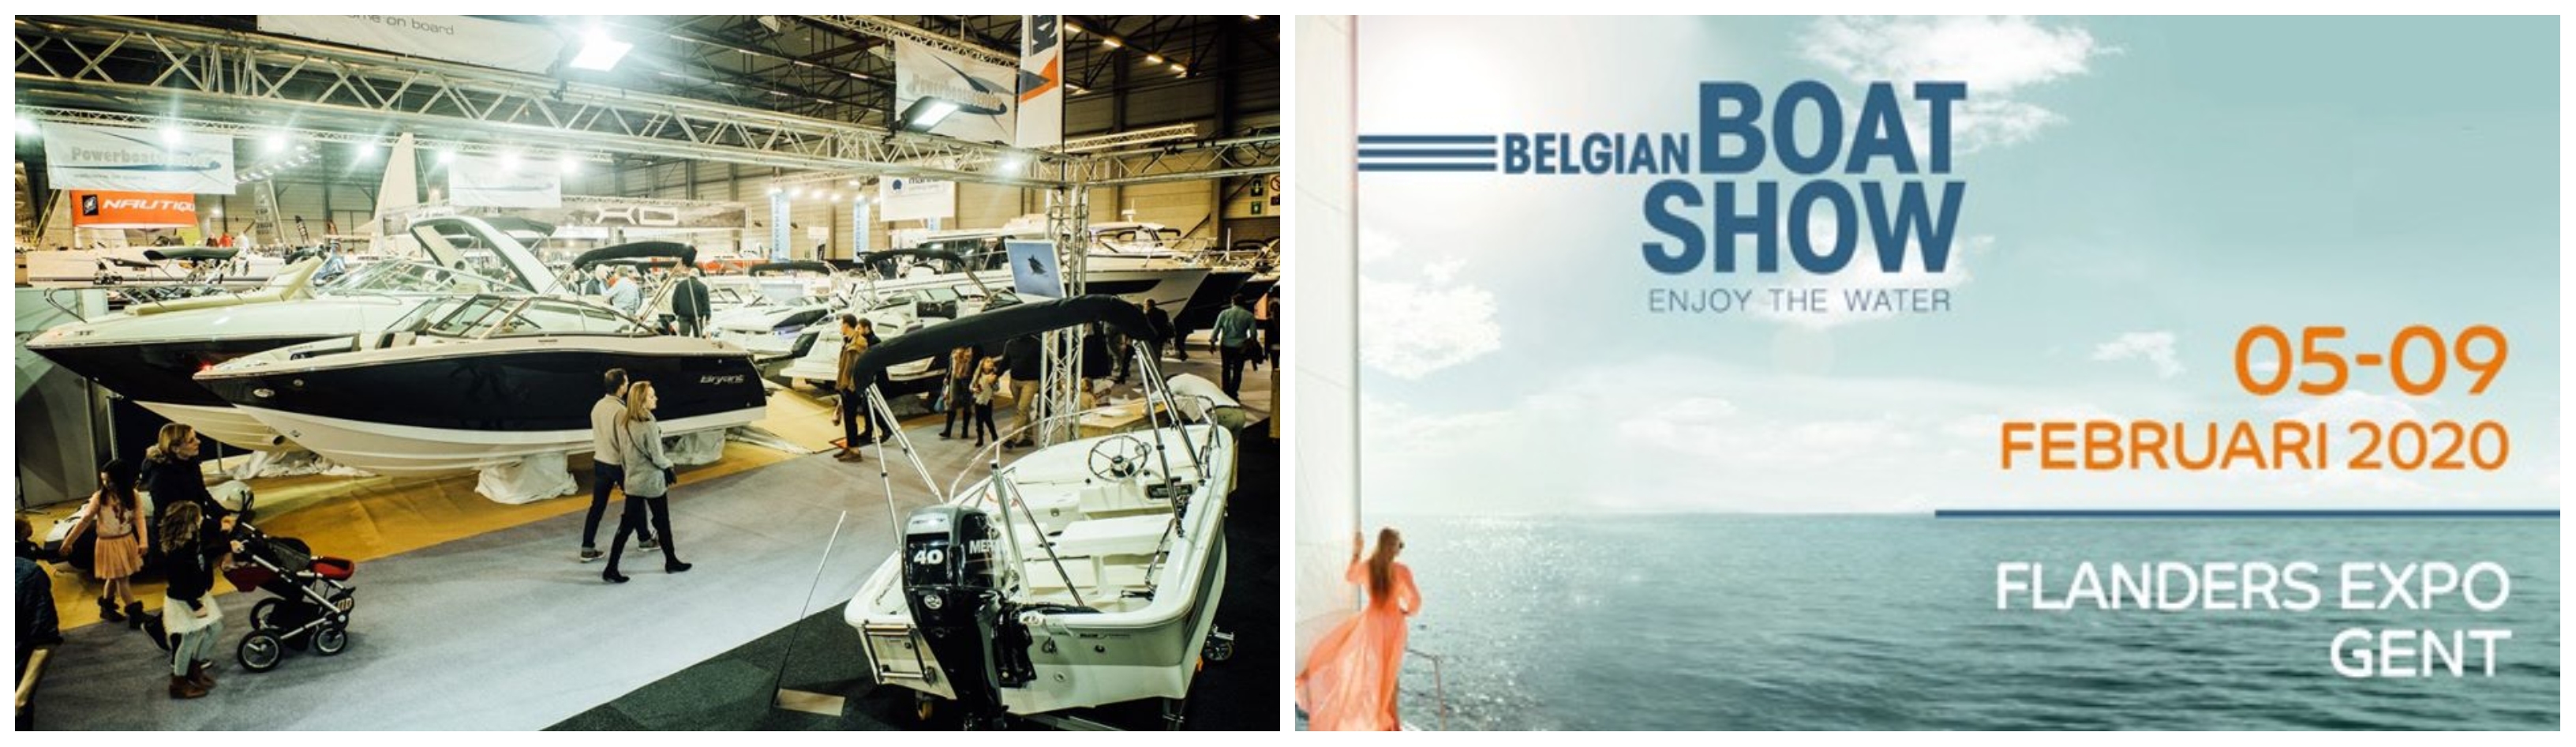 belgian-boat-show